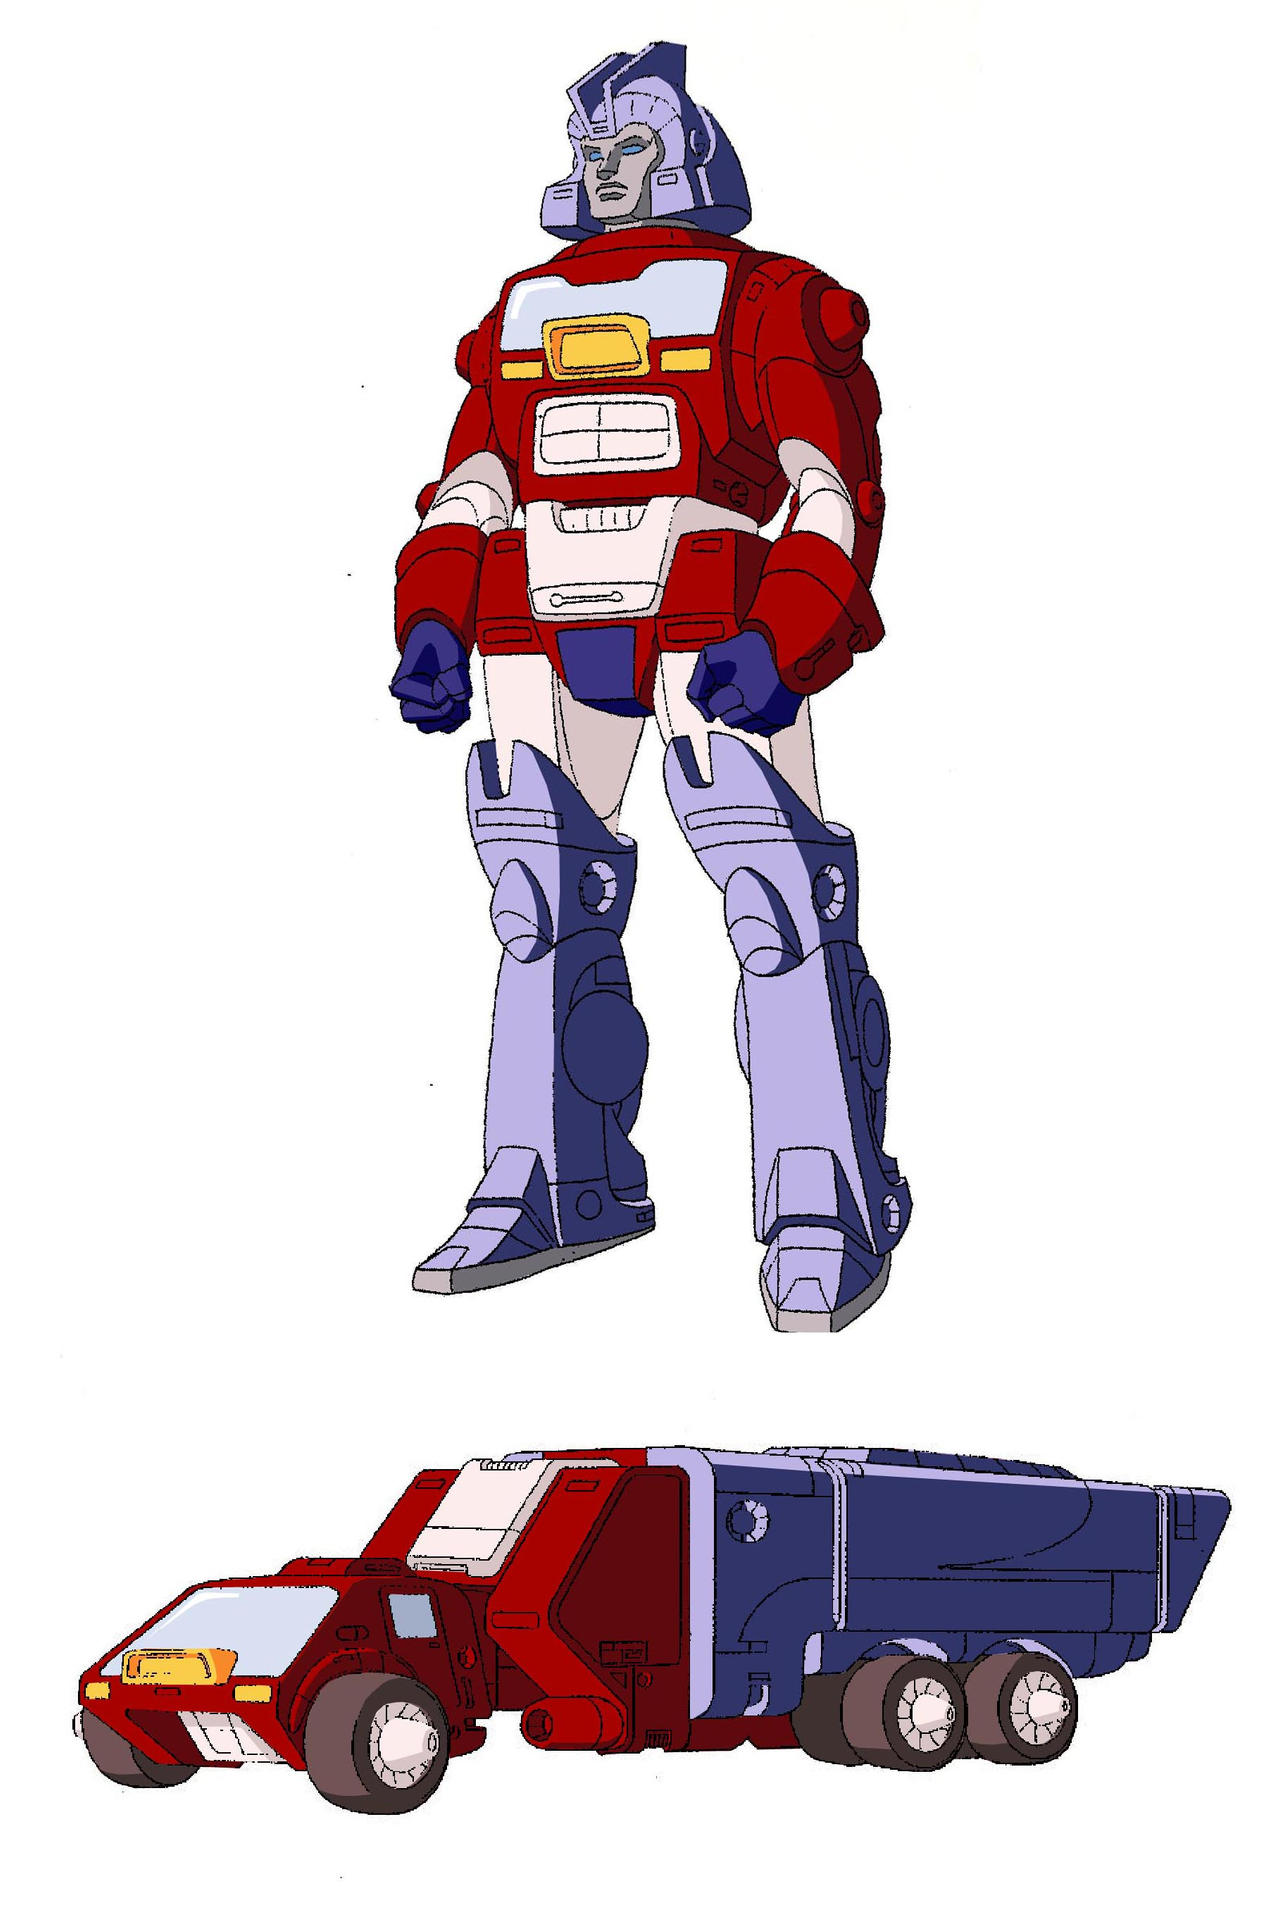 Transformers G1 Orion Pax (Fan Color Model) by Zobovor on DeviantArt